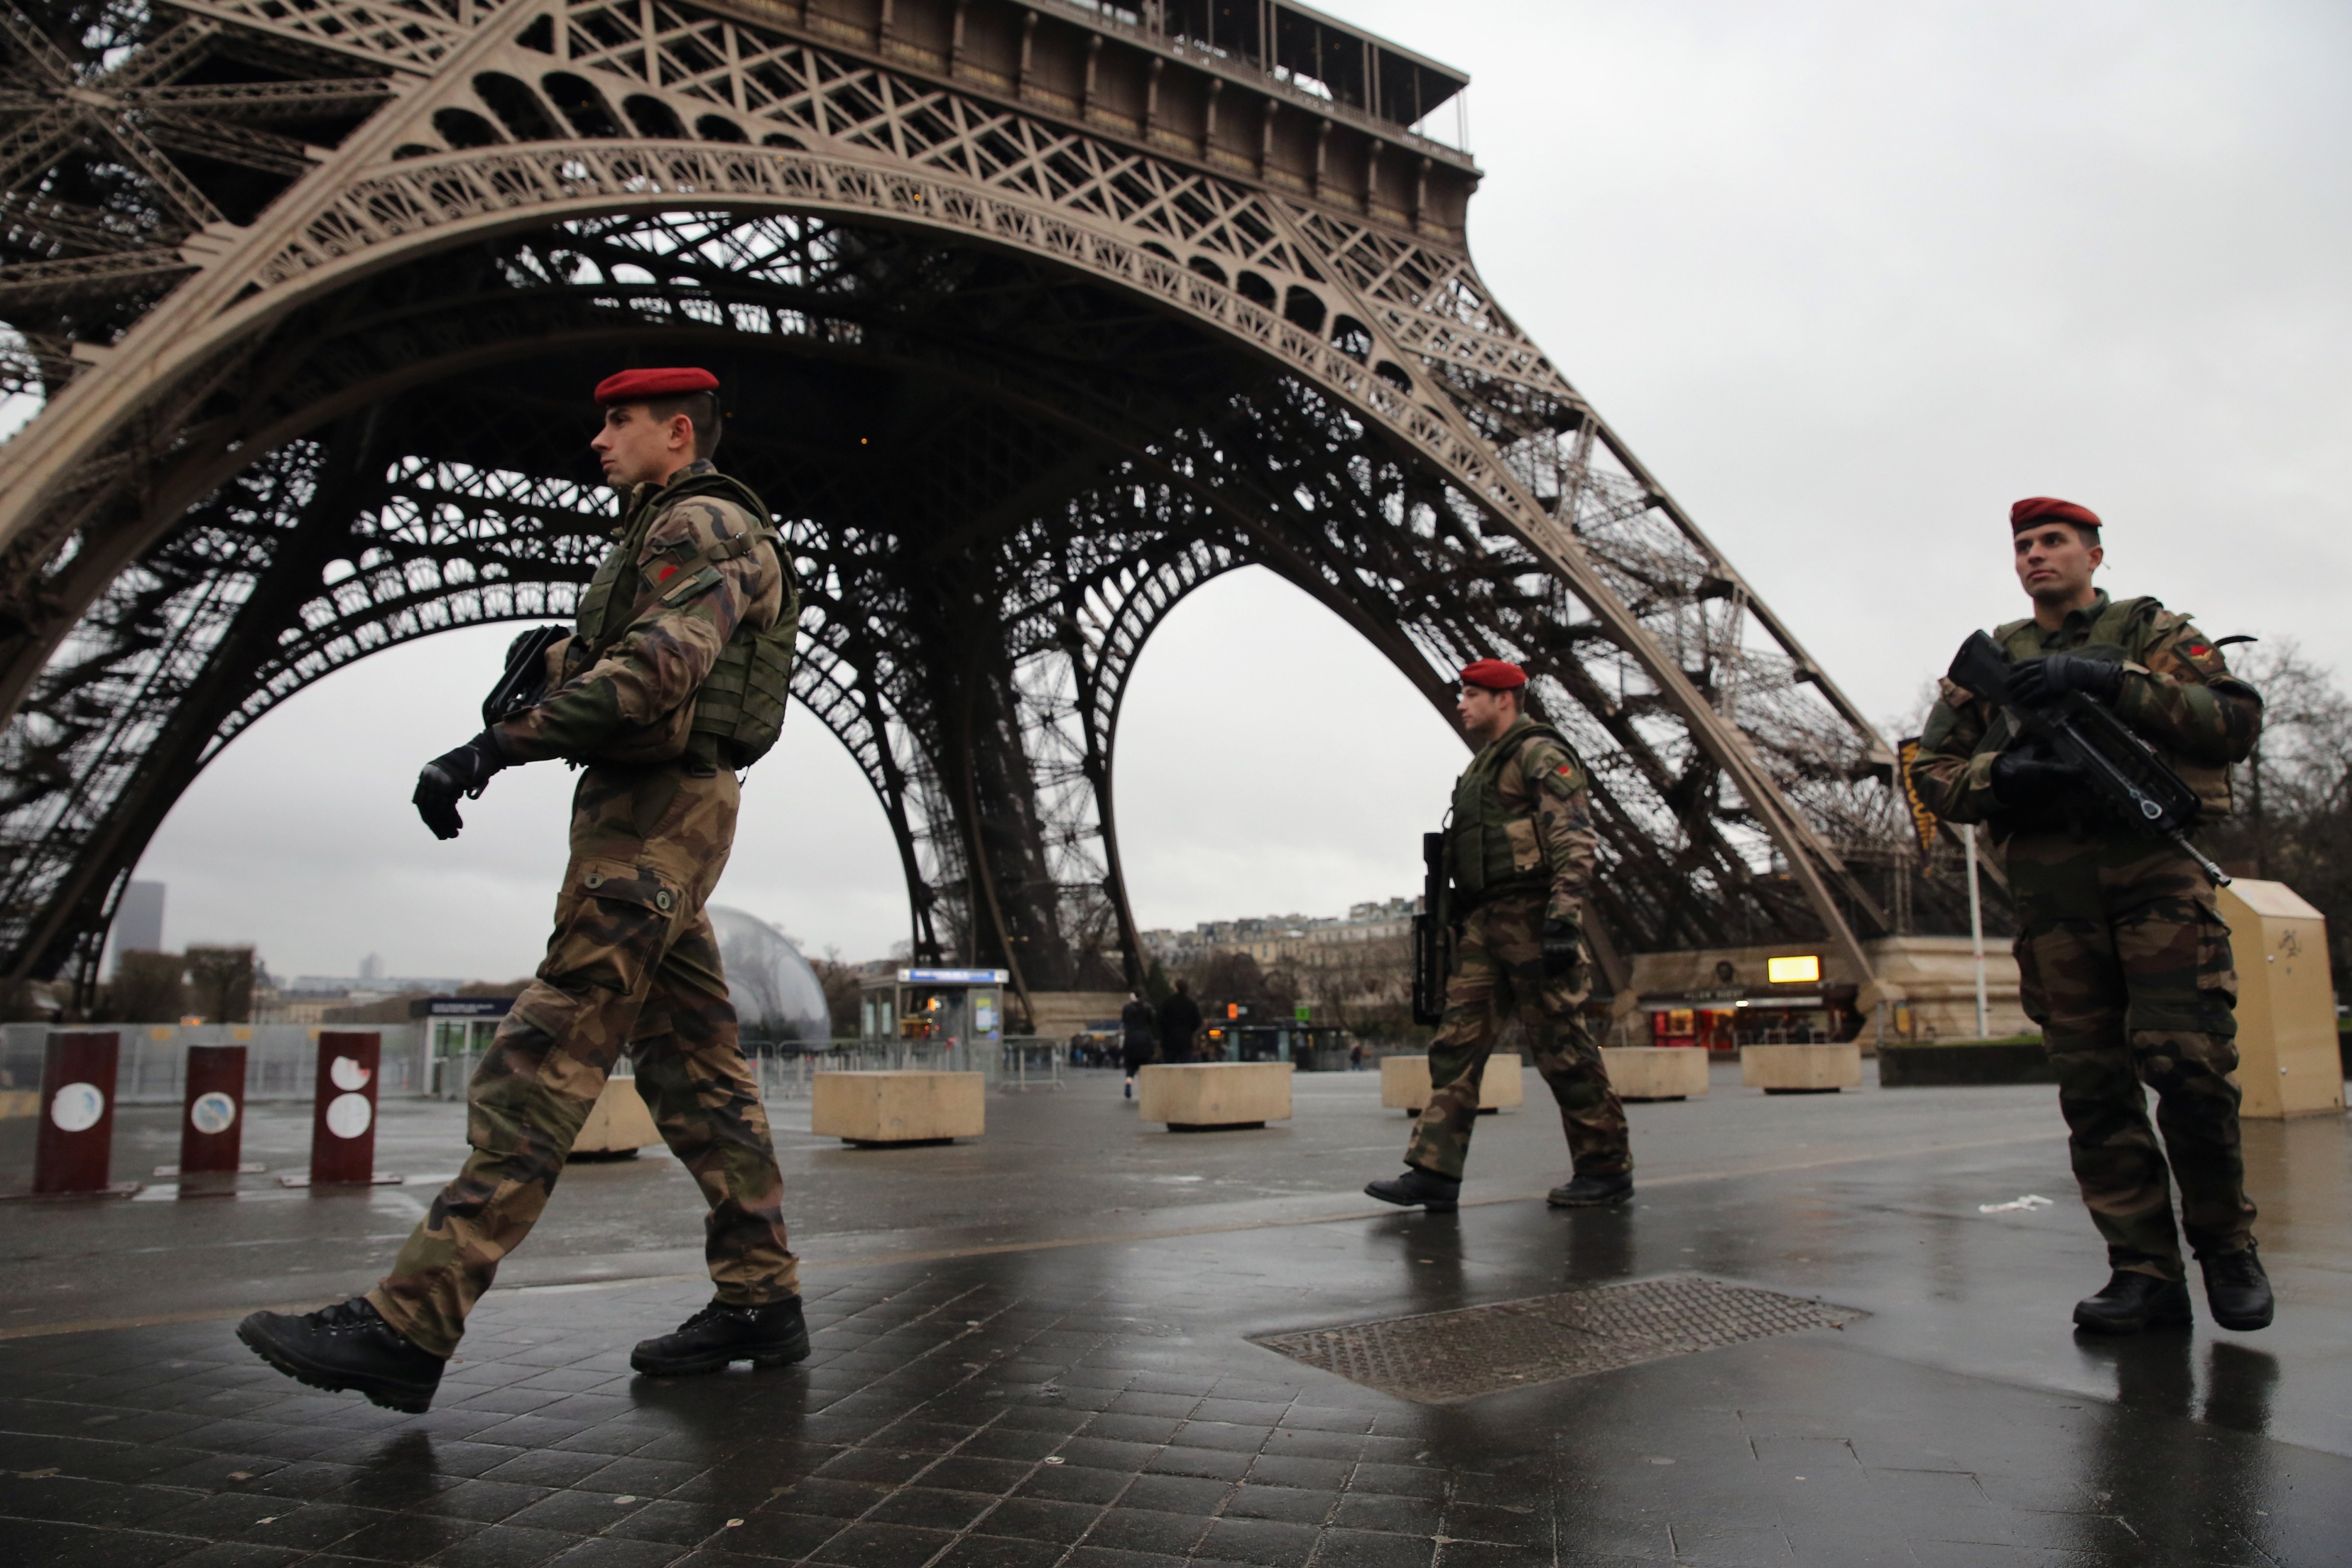 Armed security patrols around the Eiffel Tower on Jan. 9, 2015 in Paris, France (Dan Kitwood&mdash;Getty Images)